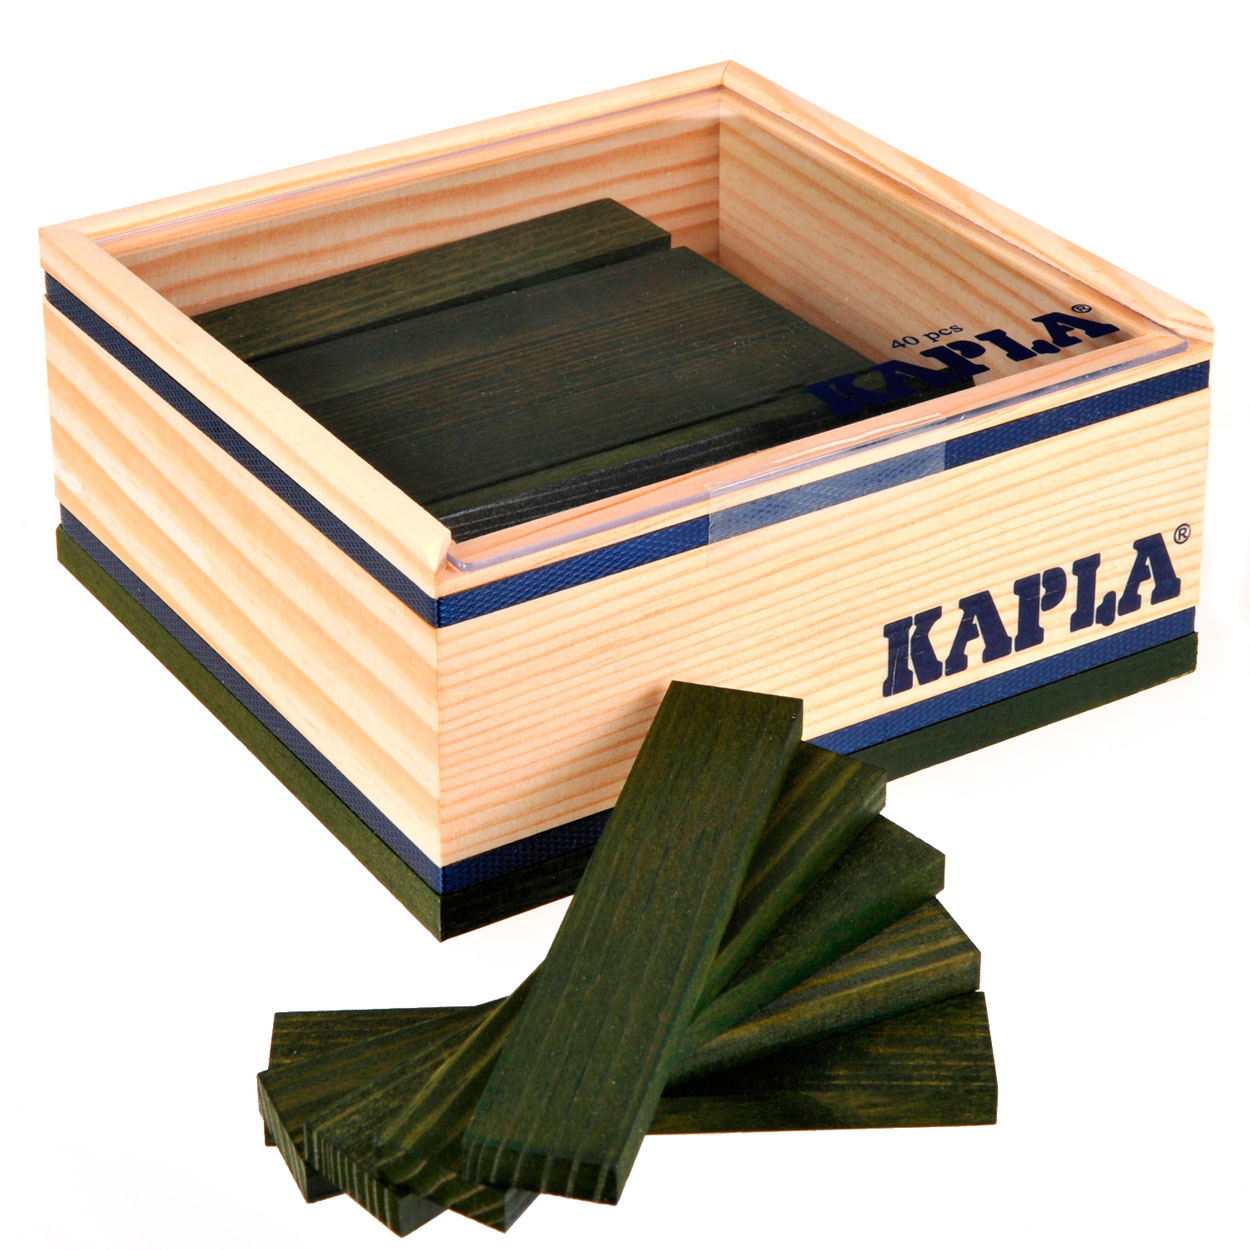 Kapla, 40 planches vertes